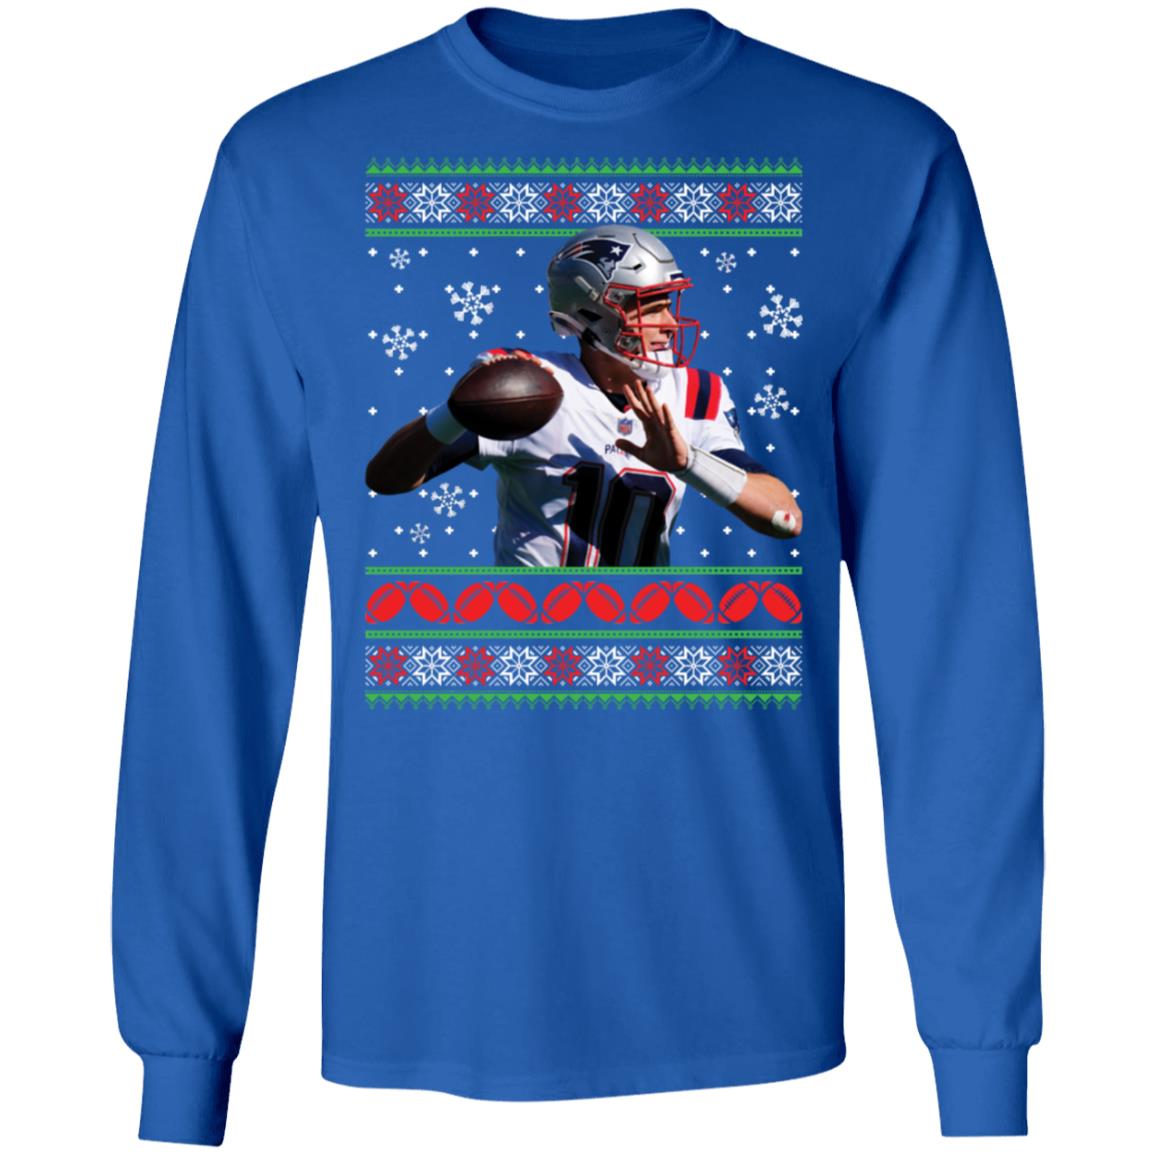 Mac Jones Christmas sweater - Lelemoon